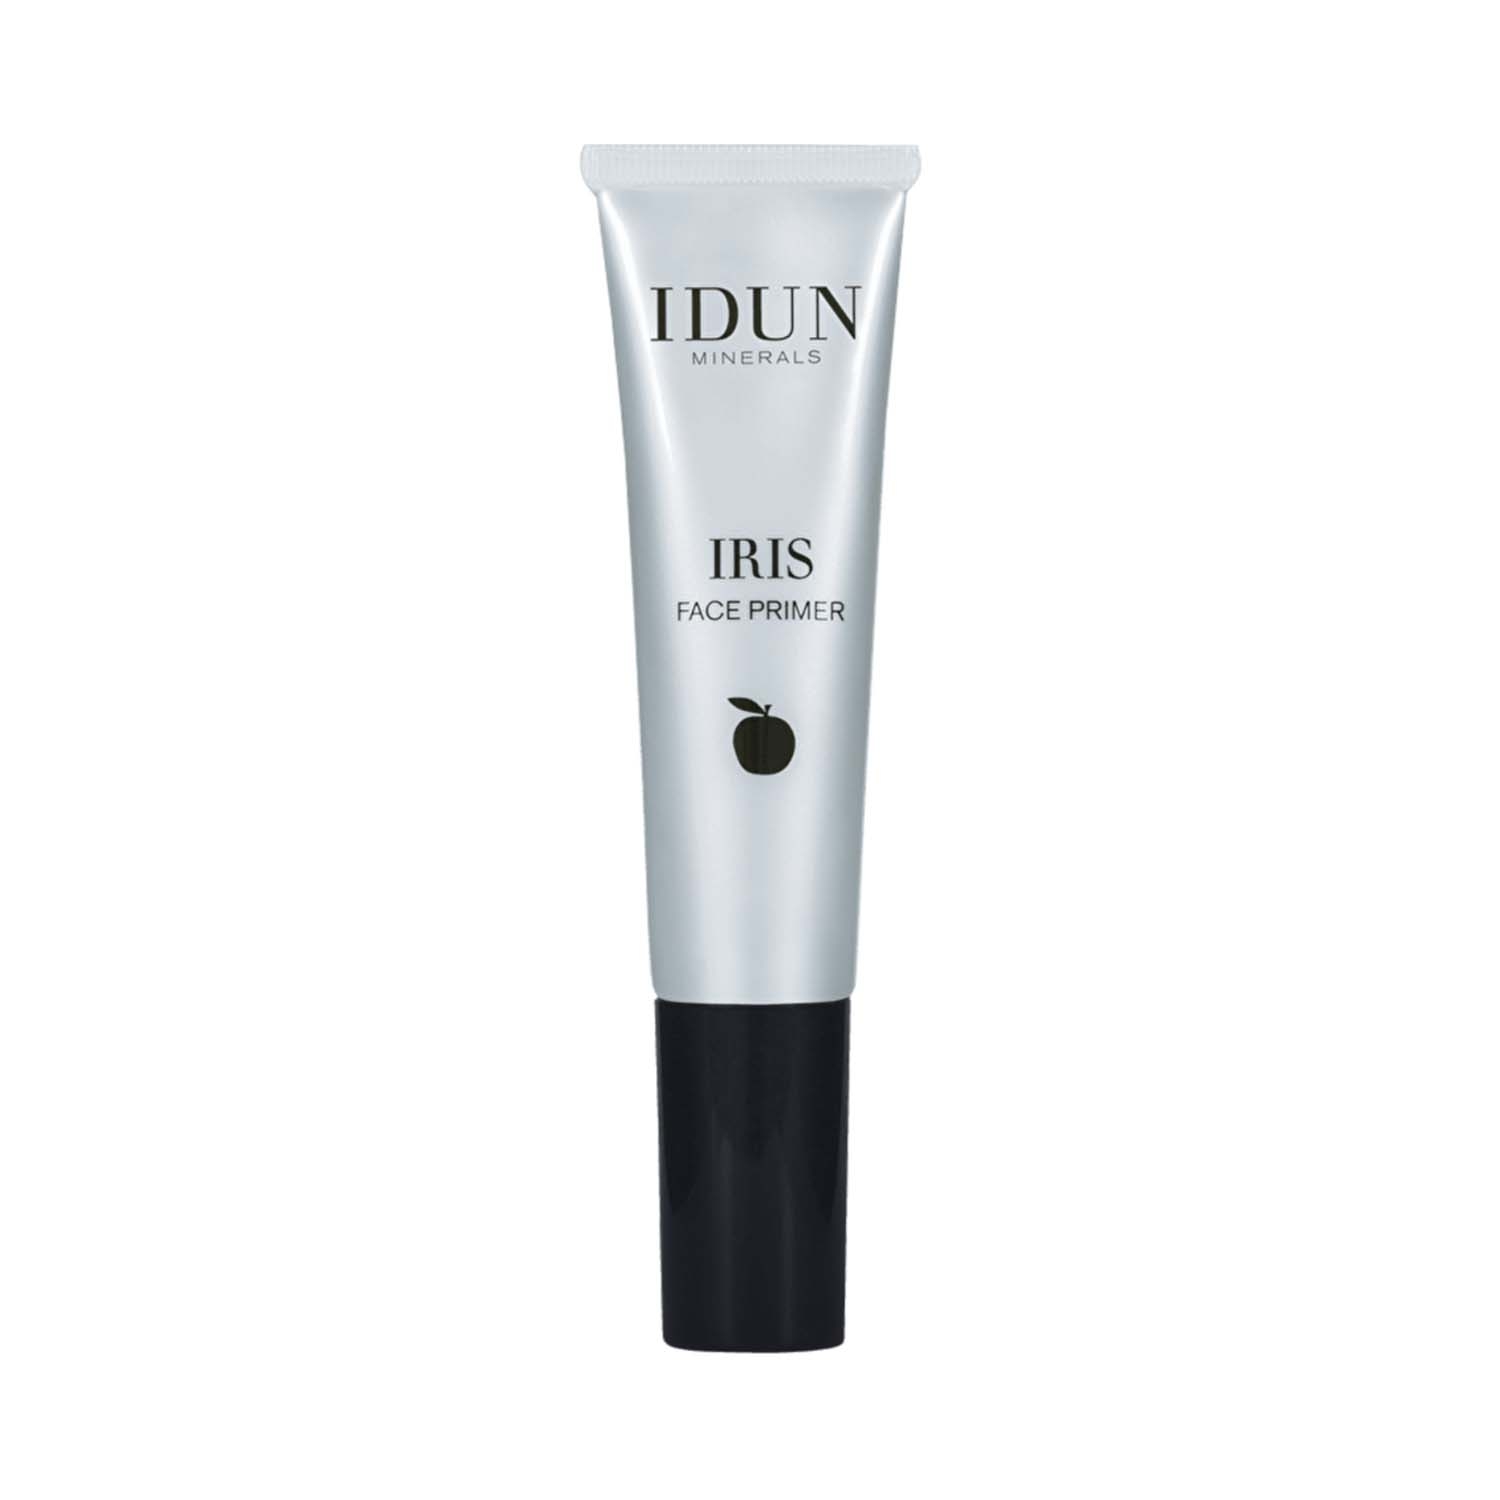 IDUN Minerals Iris Face Primer - Grey (26ml)